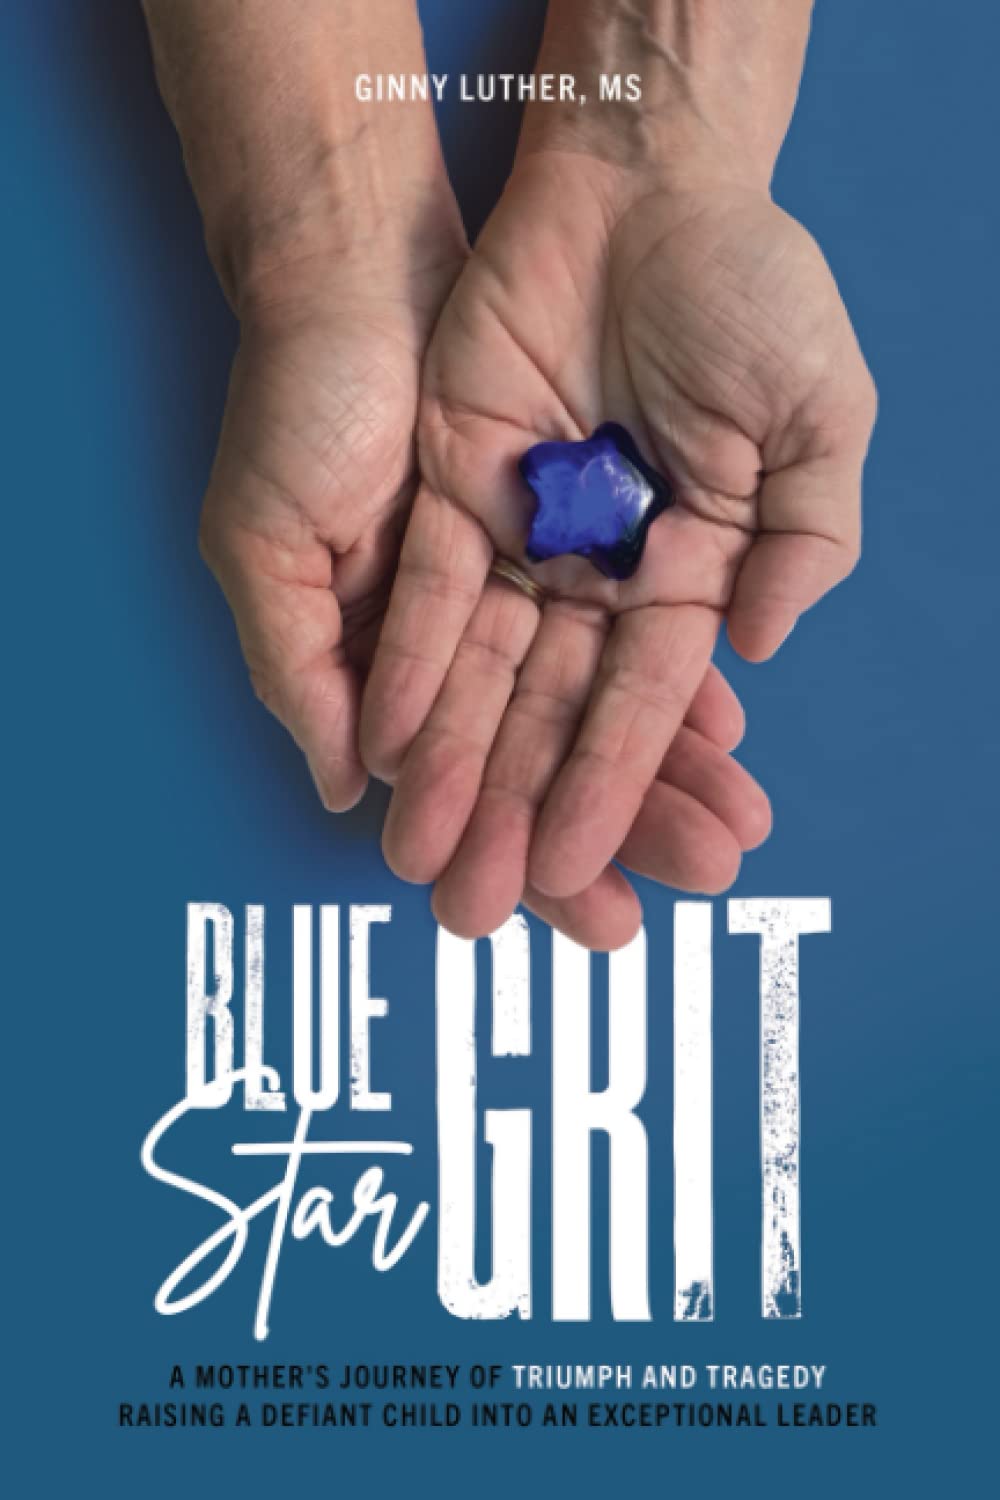 Blue Star Grit